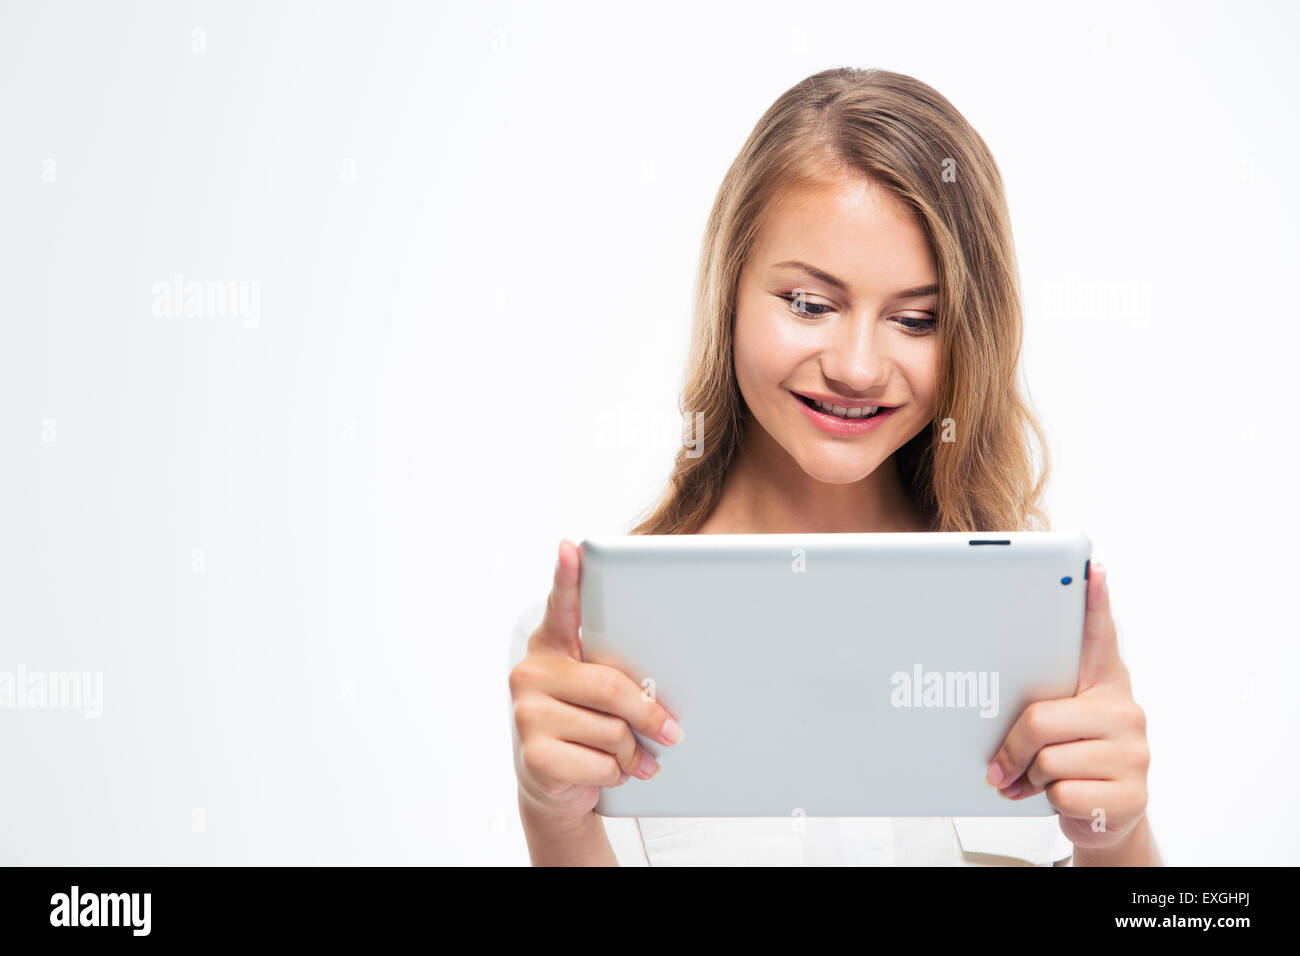 Portrait of a young woman using tablet computer isolé sur fond blanc Banque D'Images